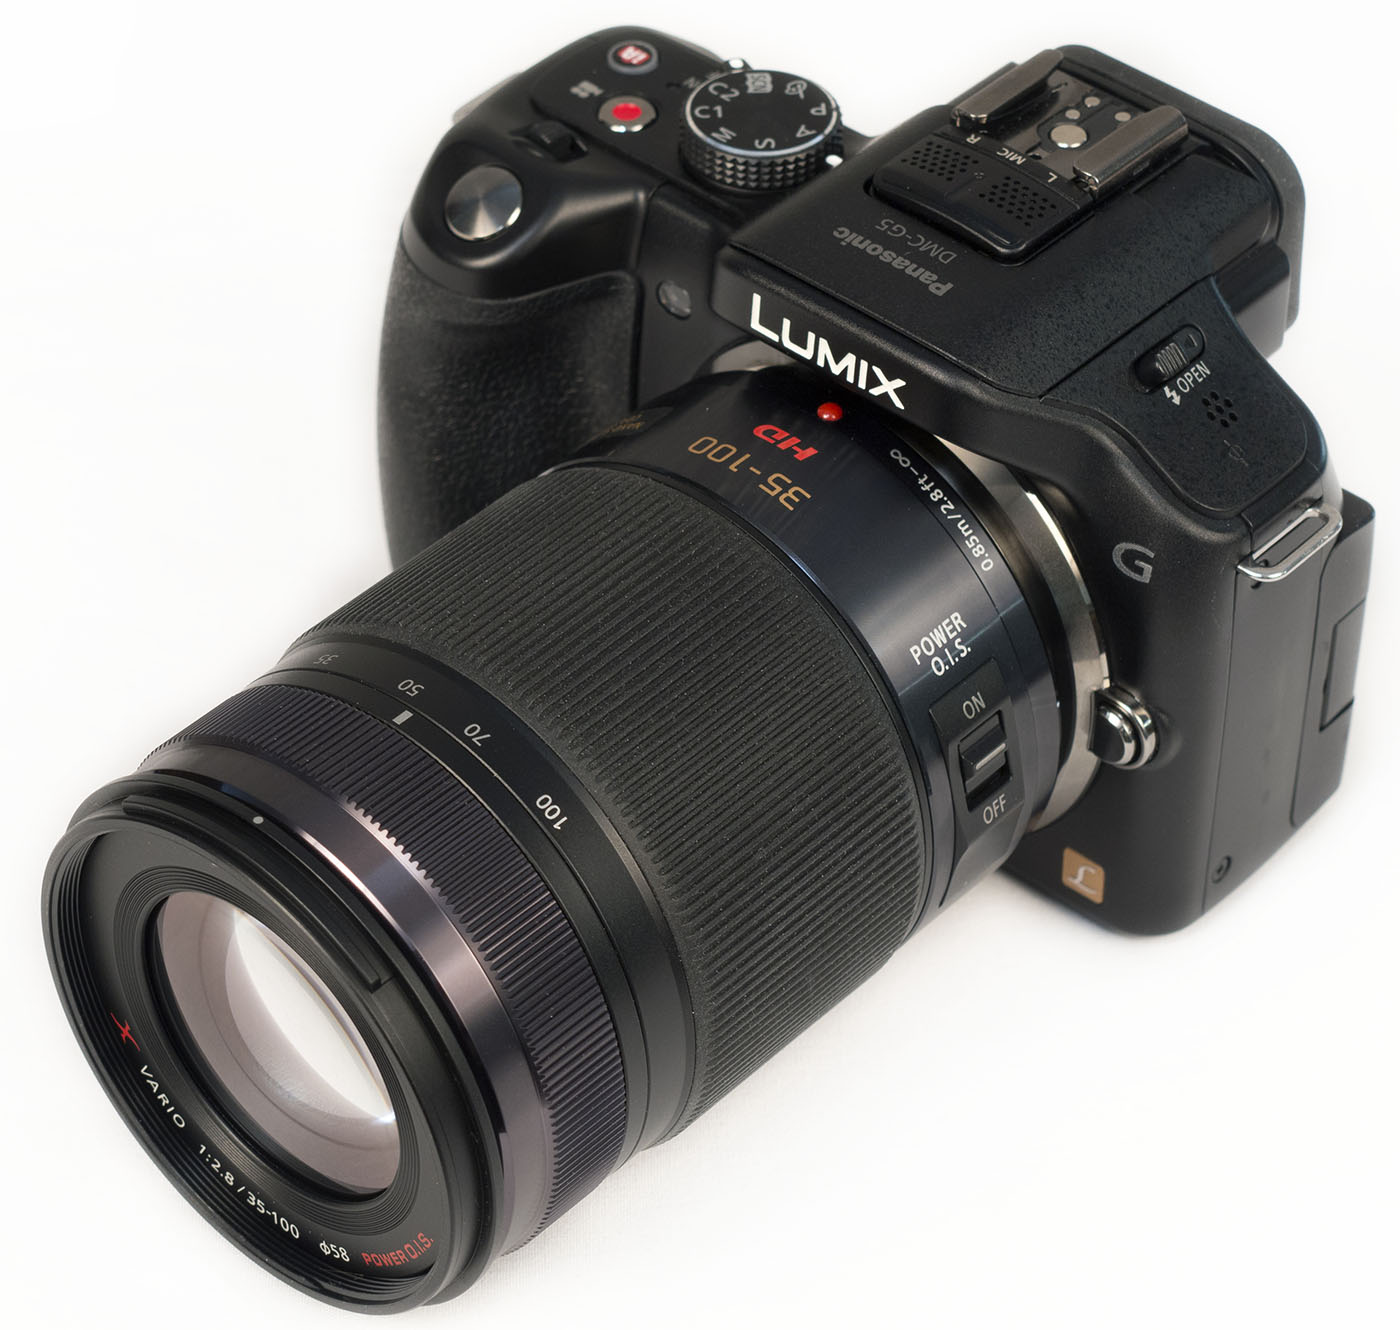 Review of Panasonic Lumix GX Vario 35-100mm f/2.8 Lens